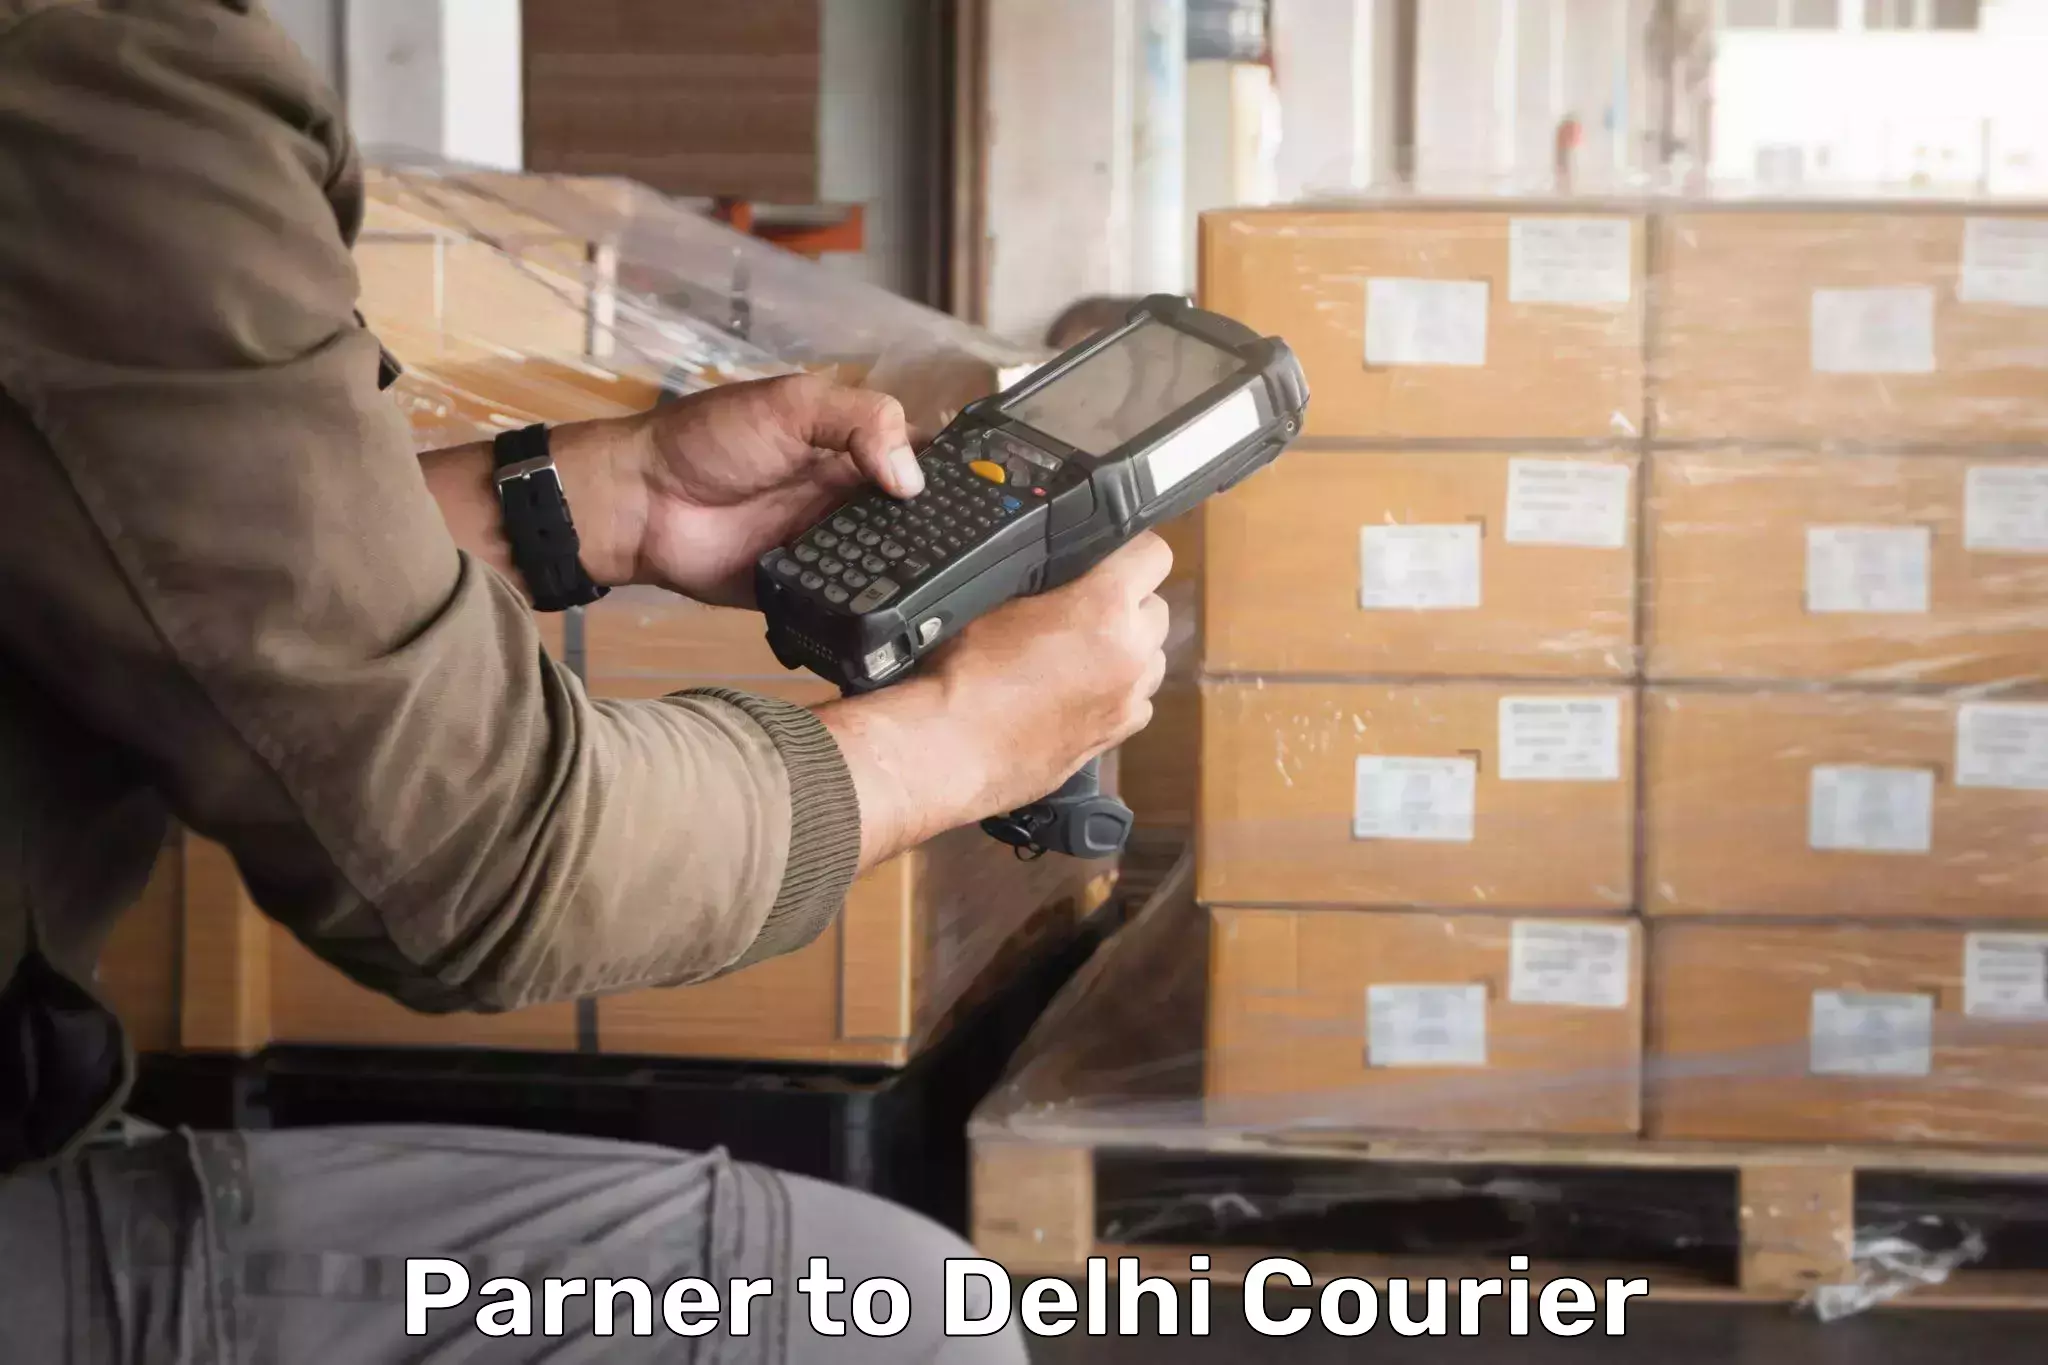 Cash on delivery service Parner to University of Delhi